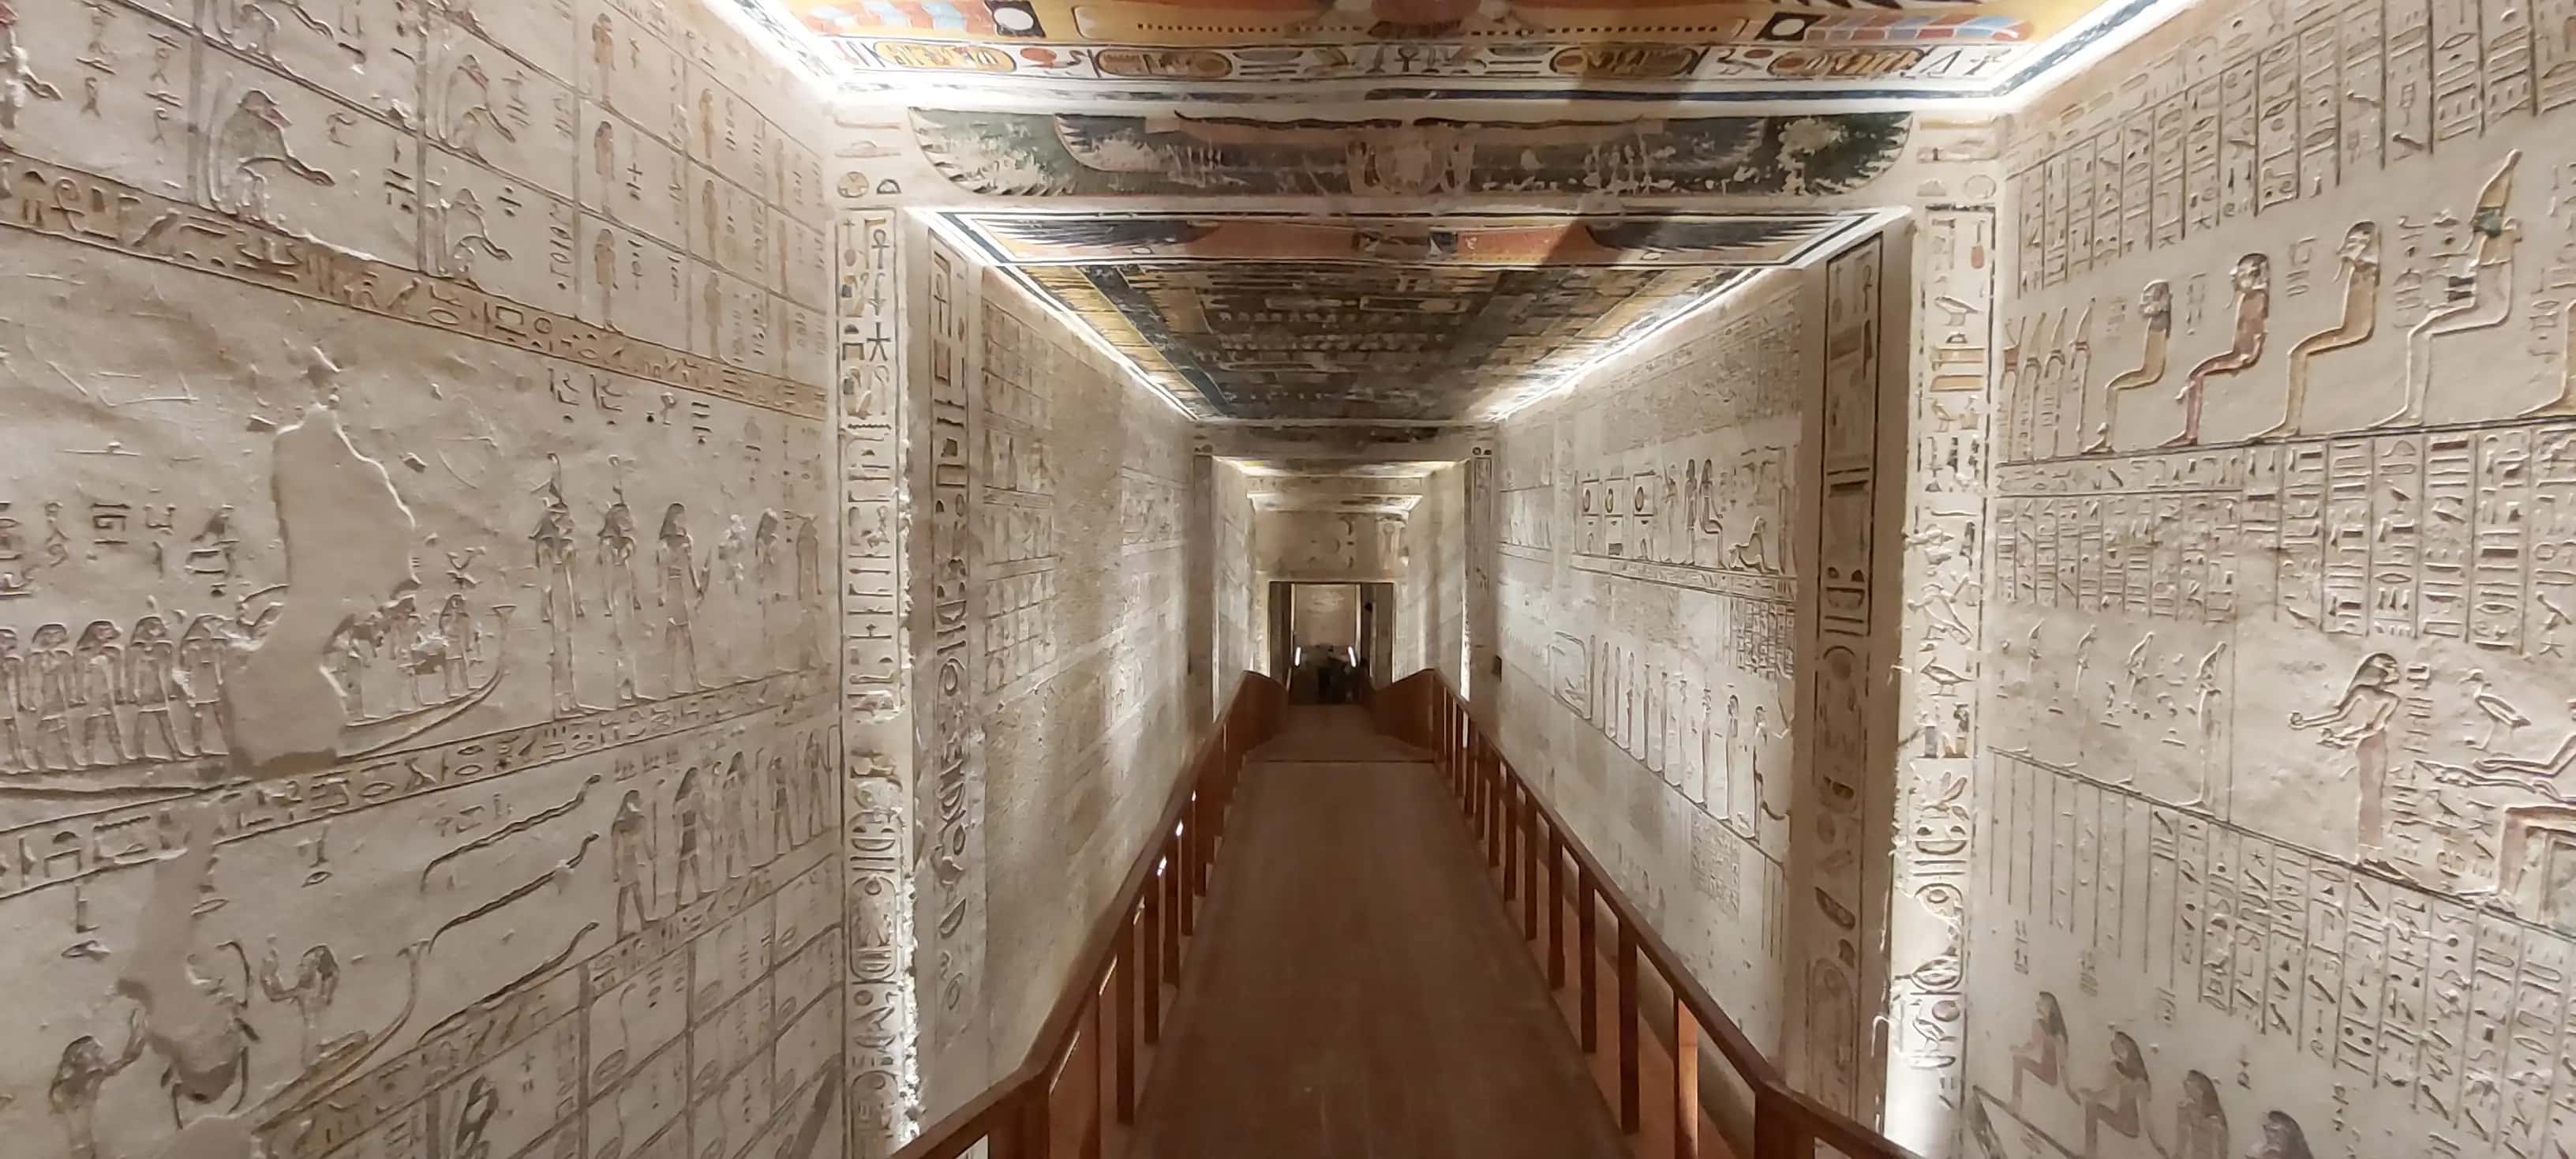 The Ancient Egypt Dynasty |  The 18th Dynasty